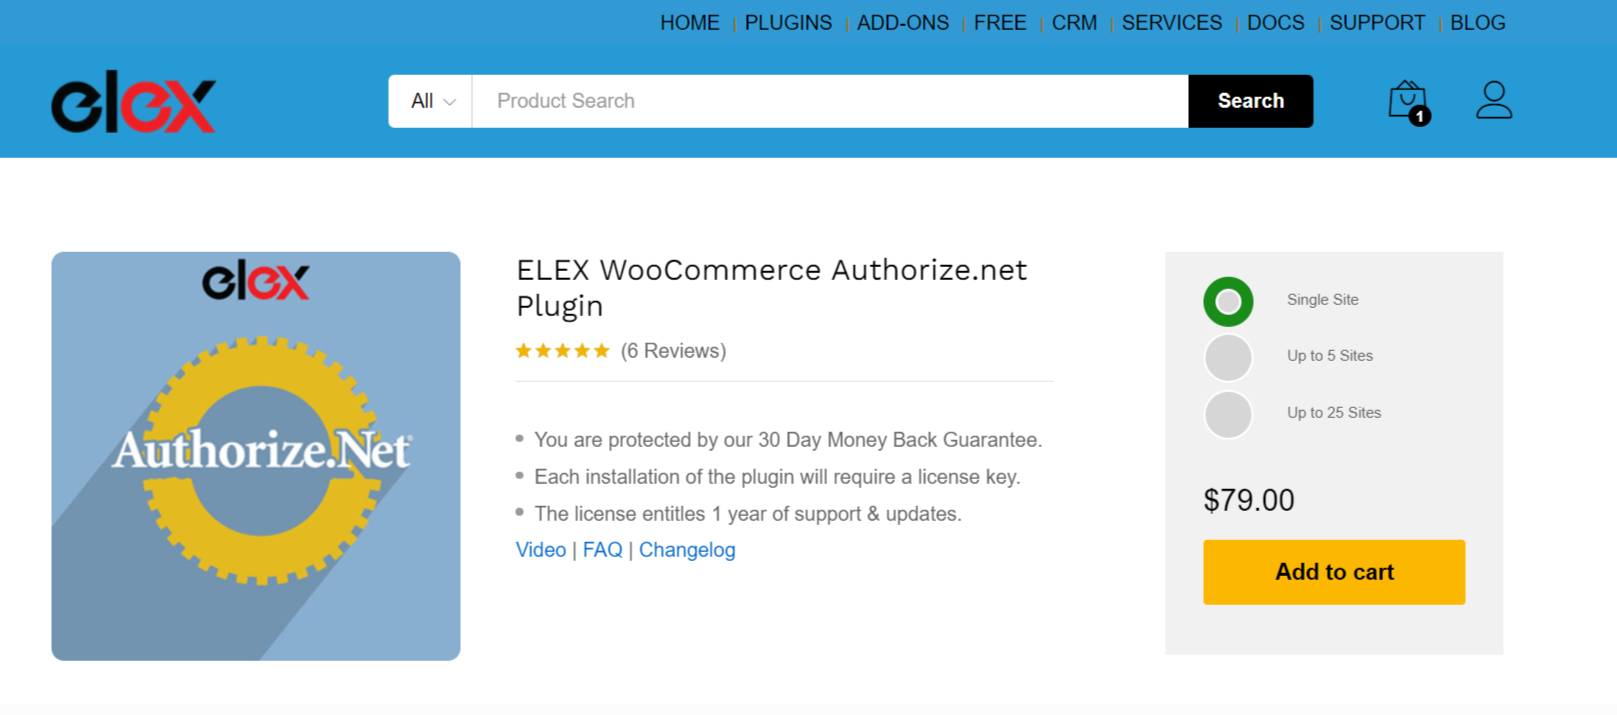 ELEX Authorize.net plugin product page.